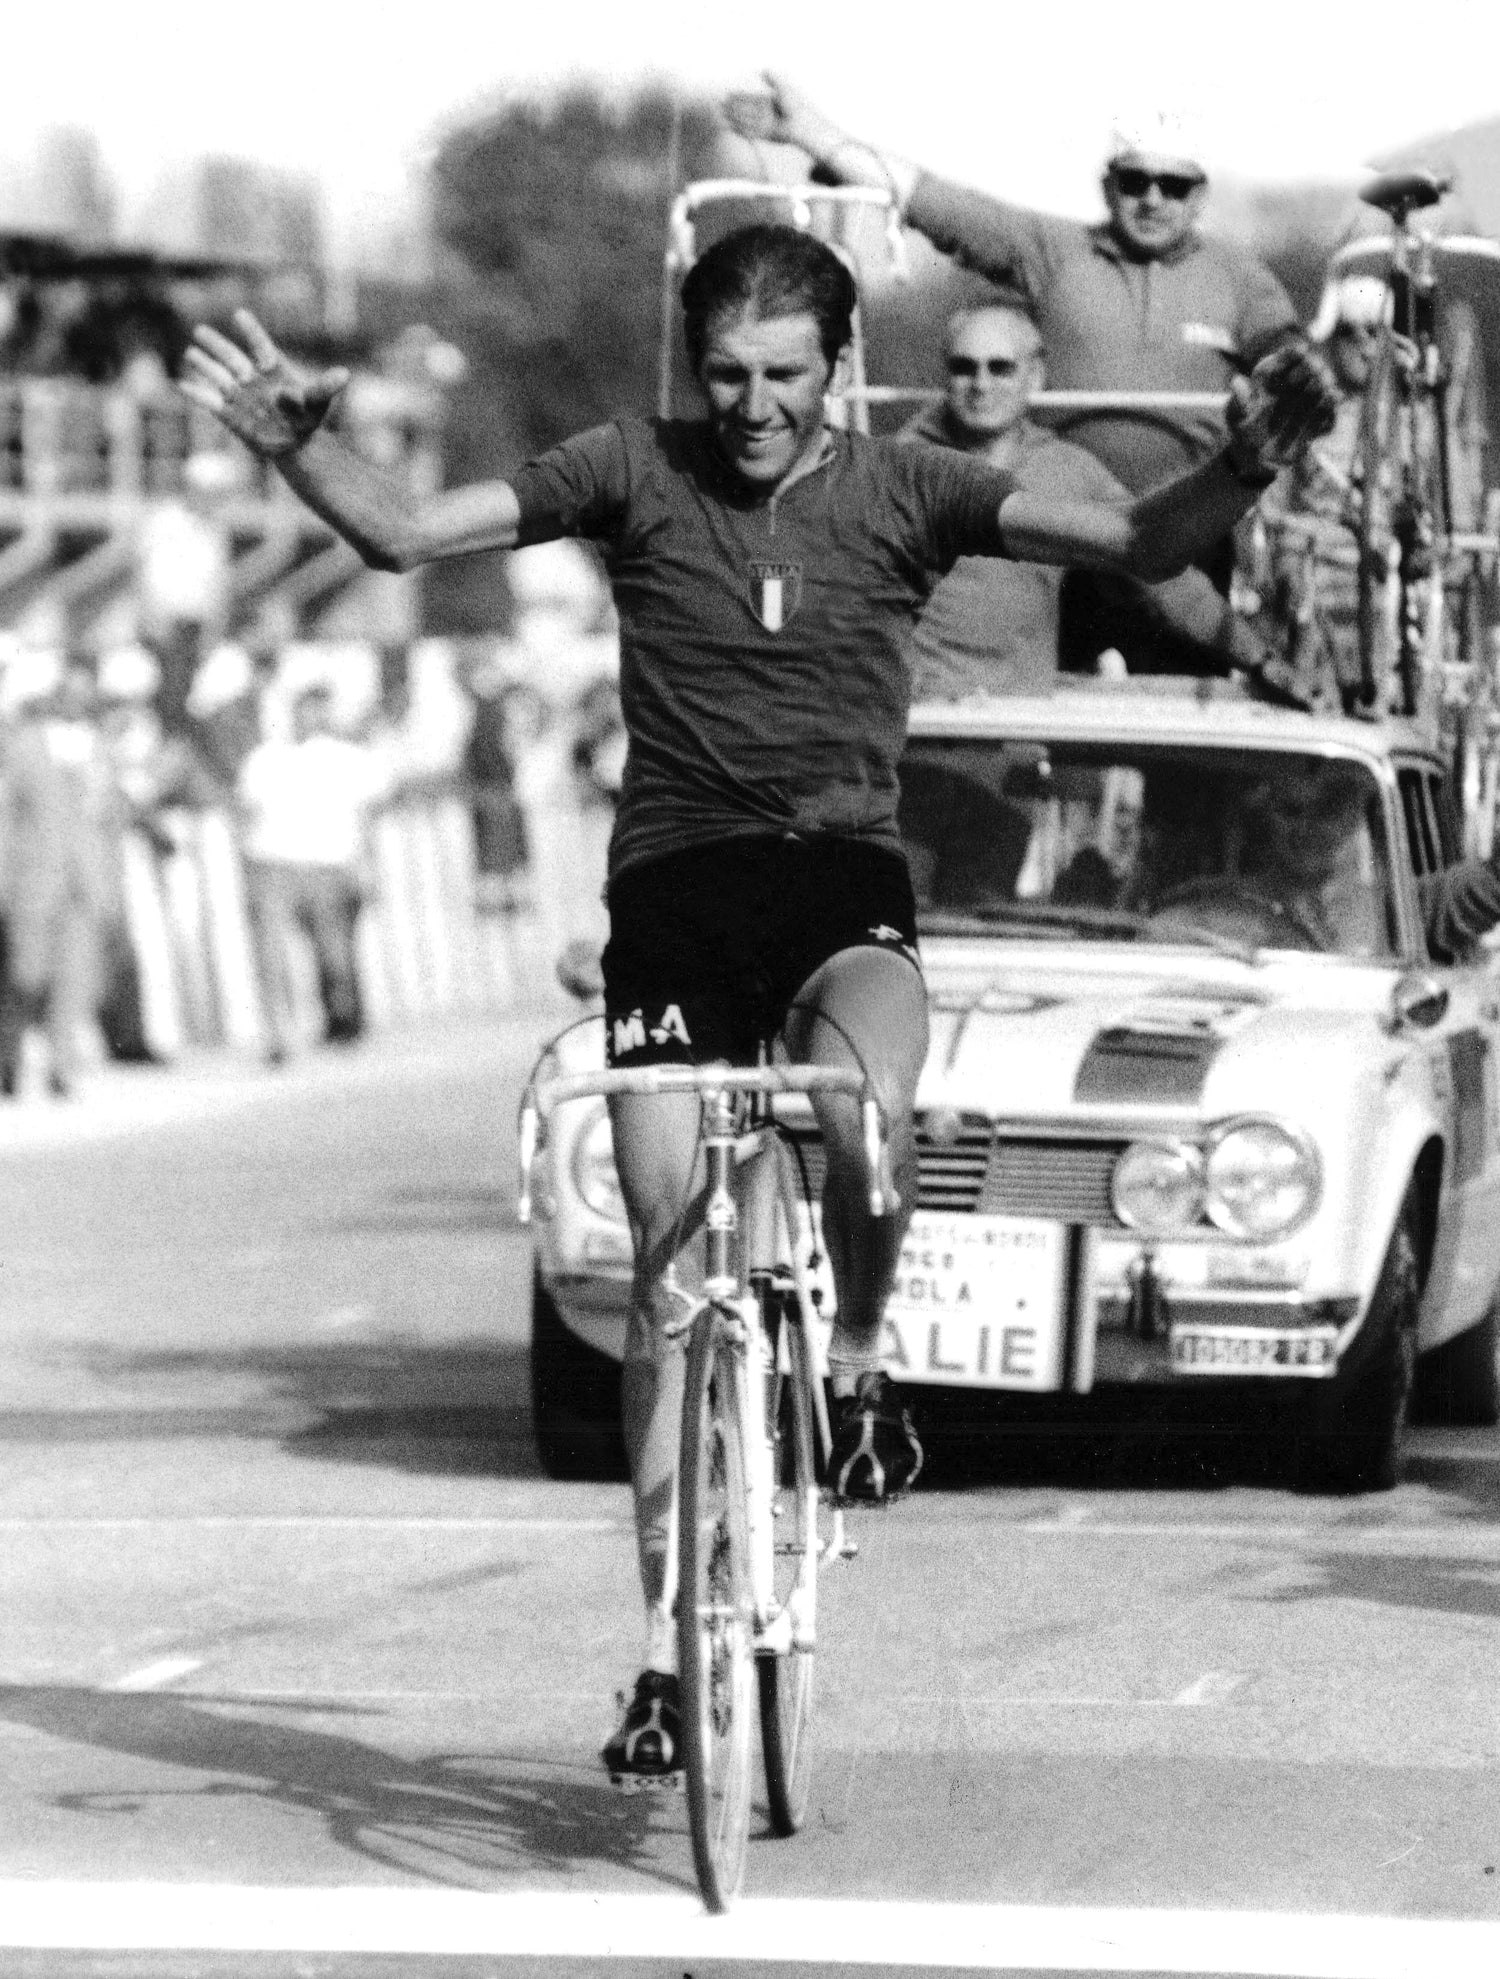 Vittorio Adorni on his Masi bicycle